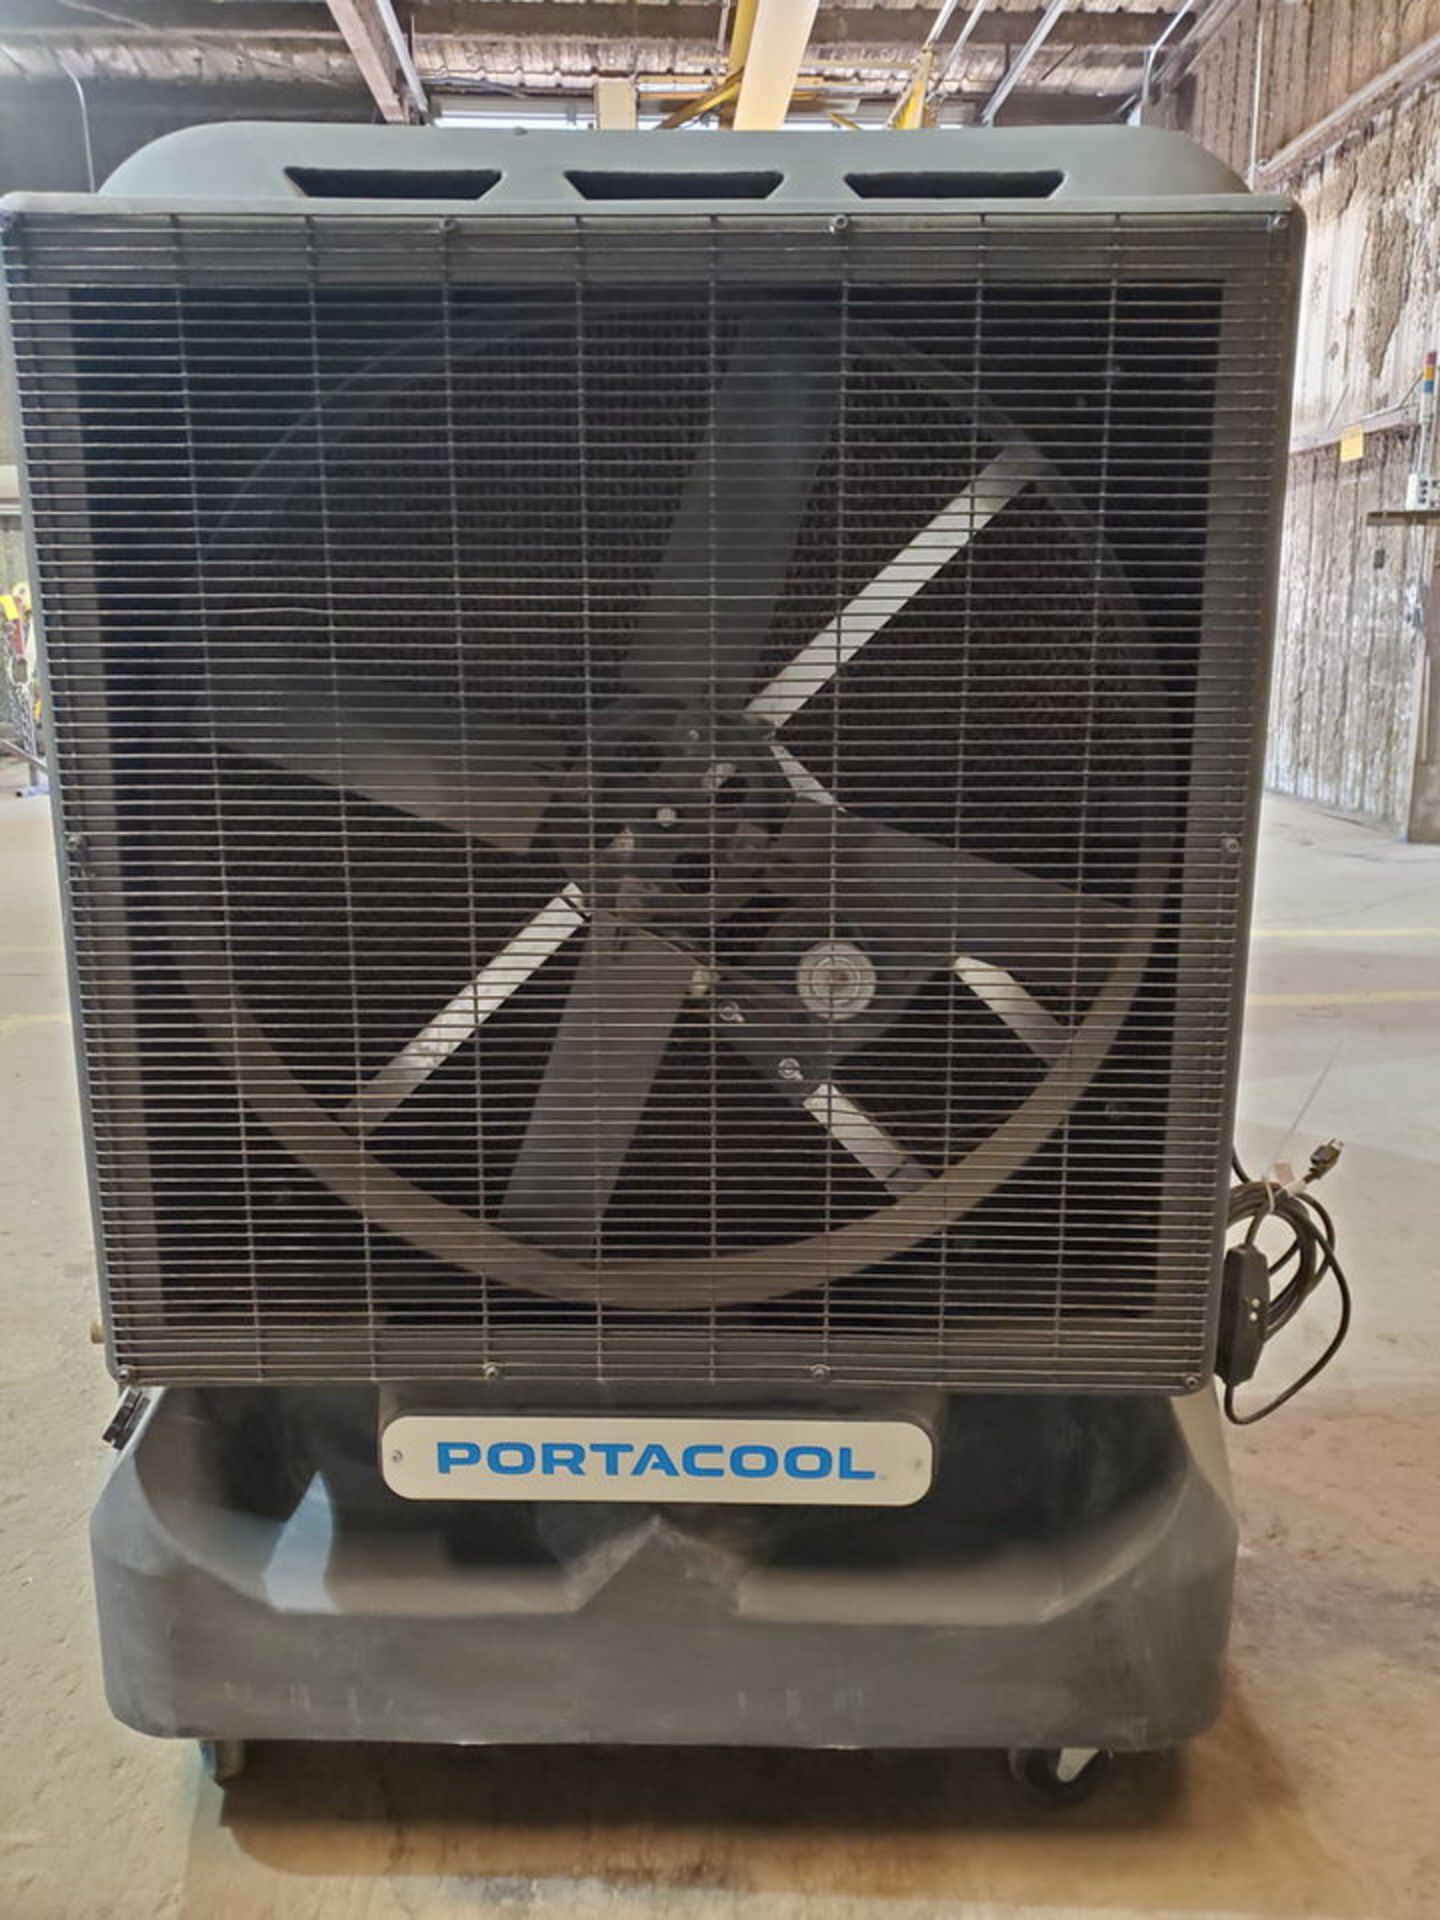 Portacool Cyclone 160 Portable Evaporative Cooler 115V, 60HZ, 7.3A - Image 5 of 7